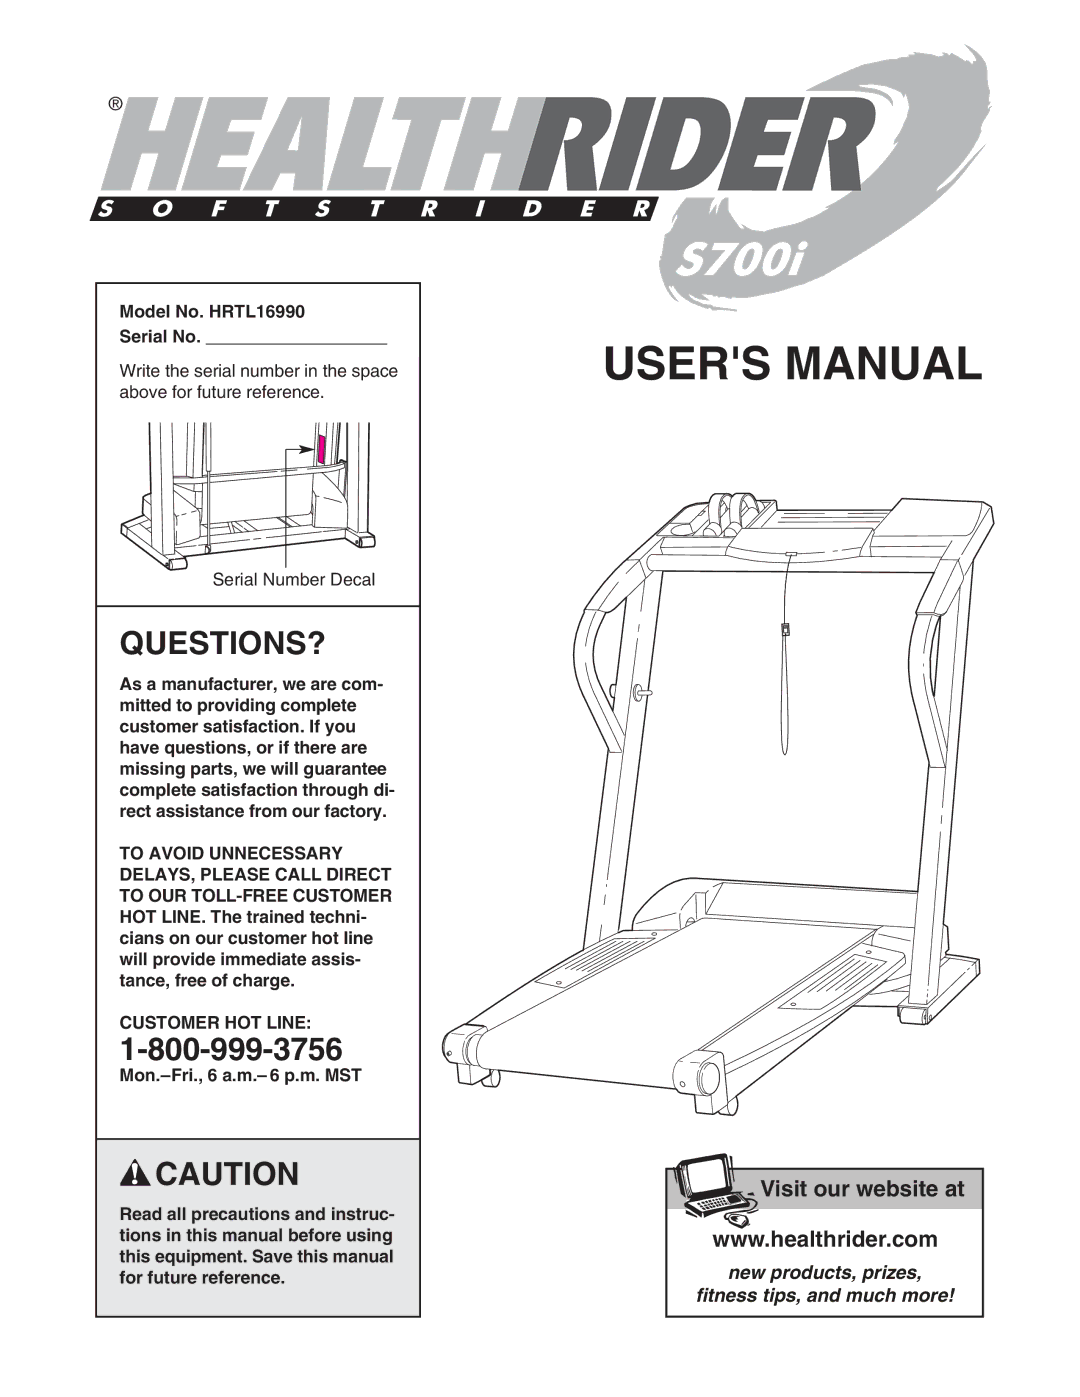 Healthrider manual Questions?, Model No. HRTL16990 Serial No, Customer HOT Line 